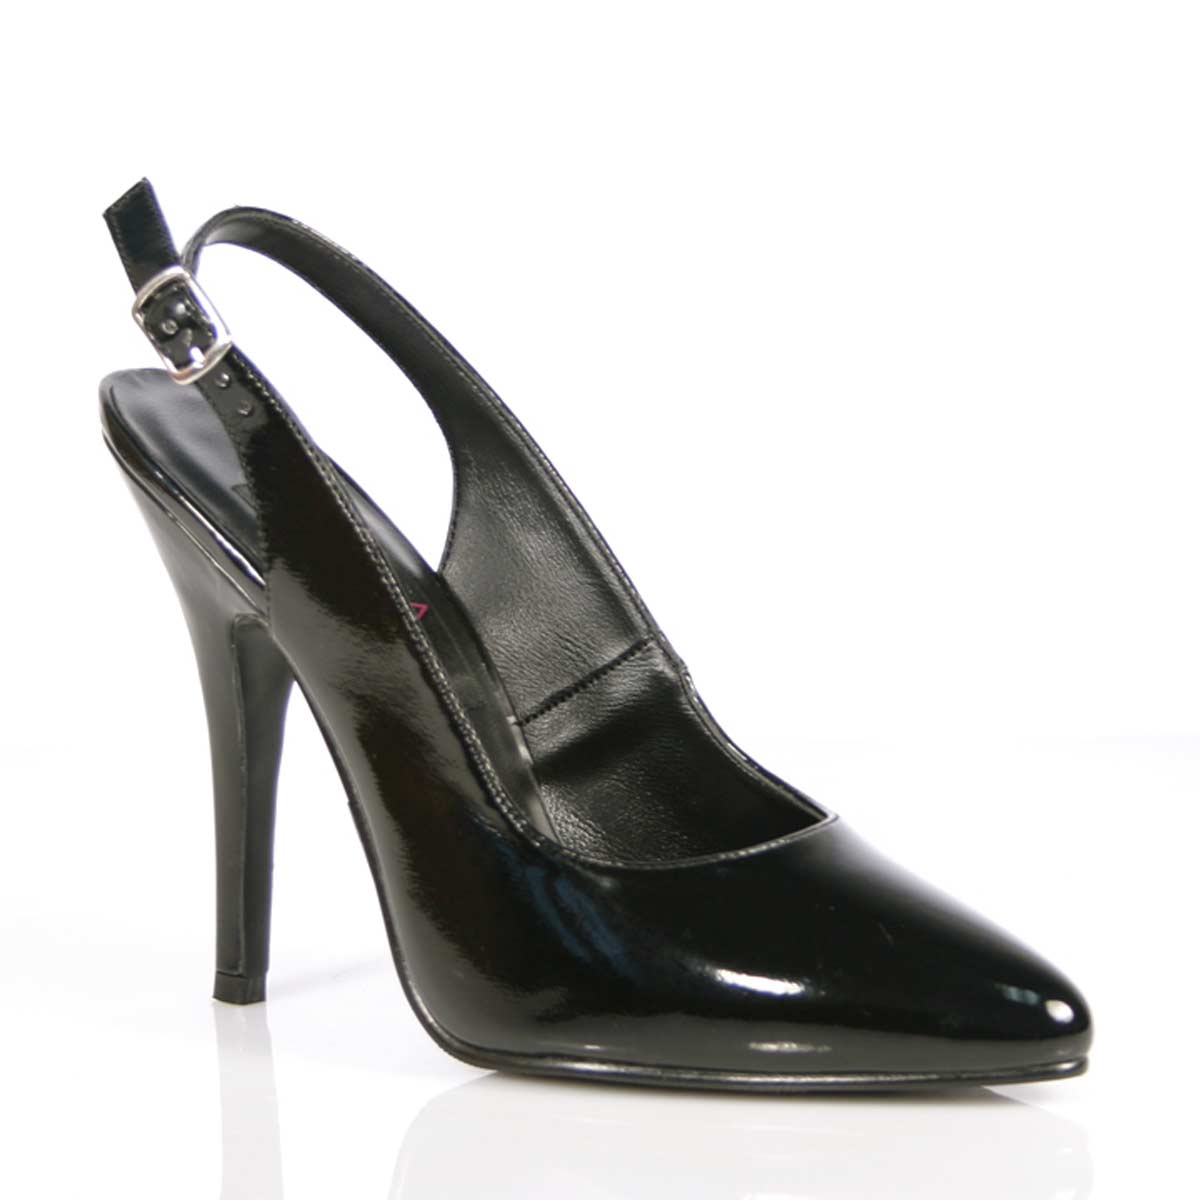 Pleaser Seduce-317 - Black Patent in Sexy Heels & Platforms - $49.95